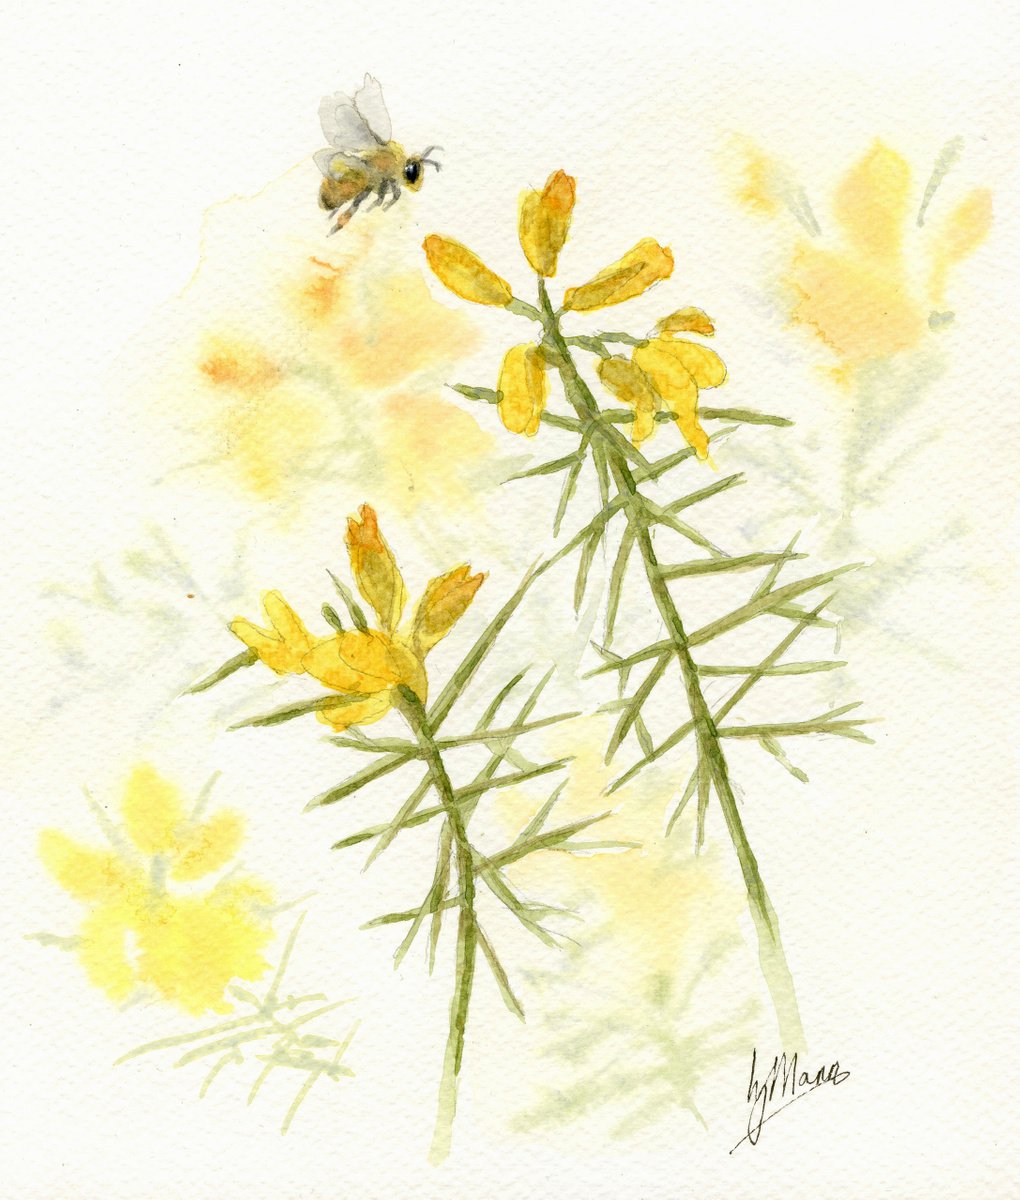 Botanical study - Gorse and Honey Bee by Lisa Mann